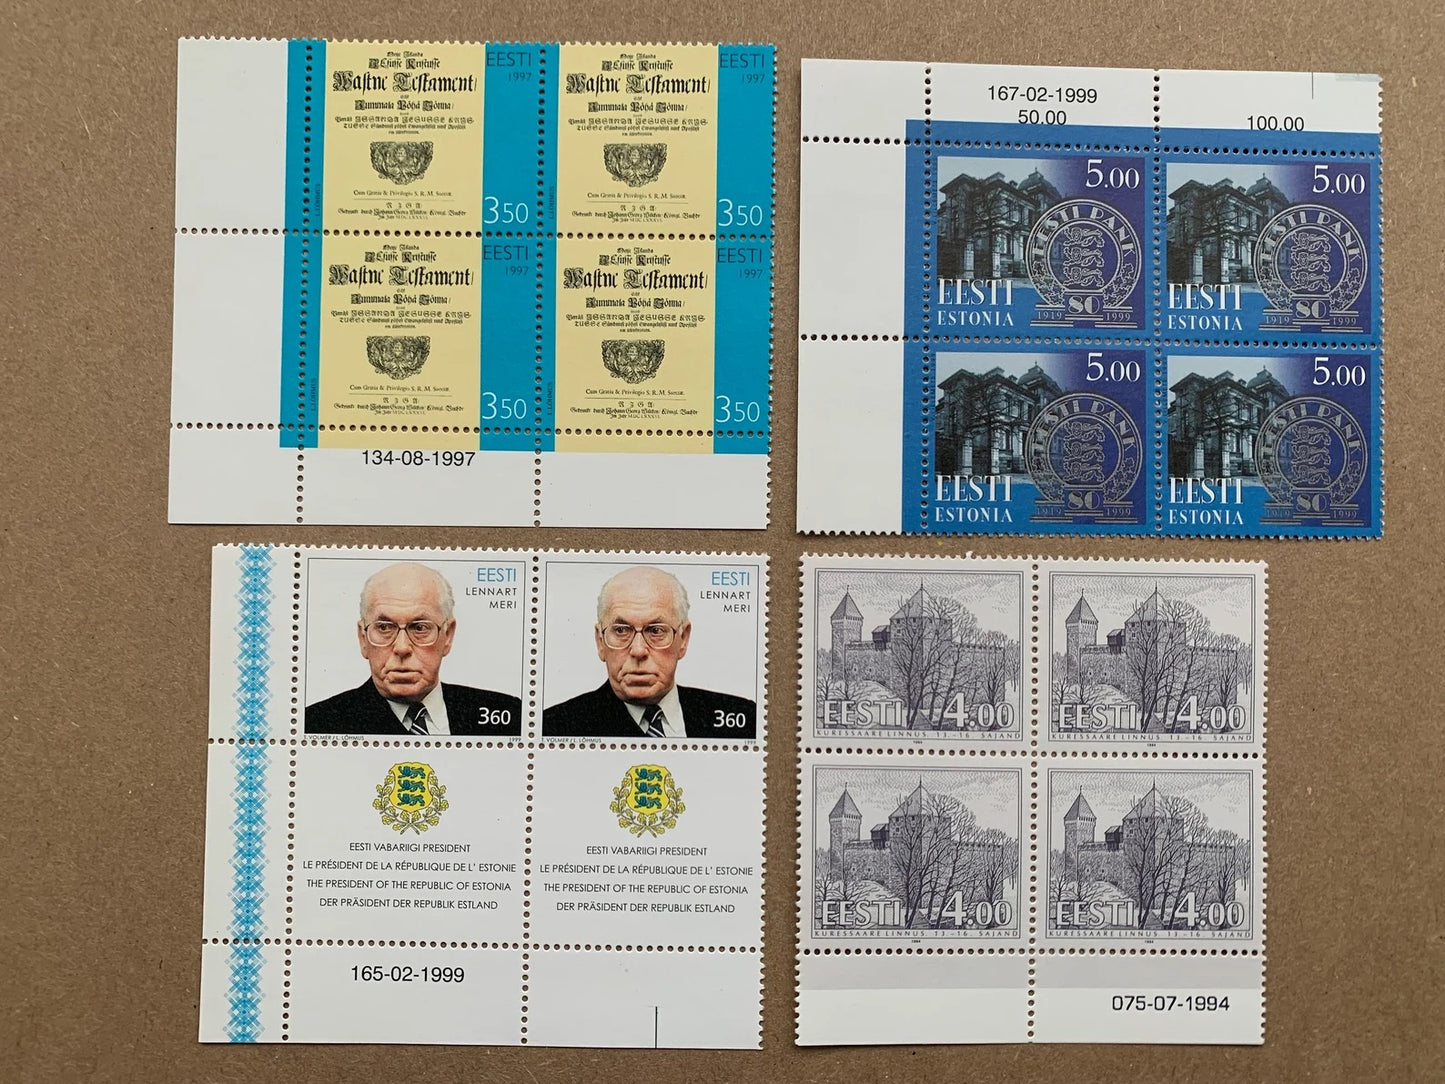 Estonian stamps unused blocks - Collection of 45 vintage postage stamps from 1992-1999 - MNH Estonian stamps.